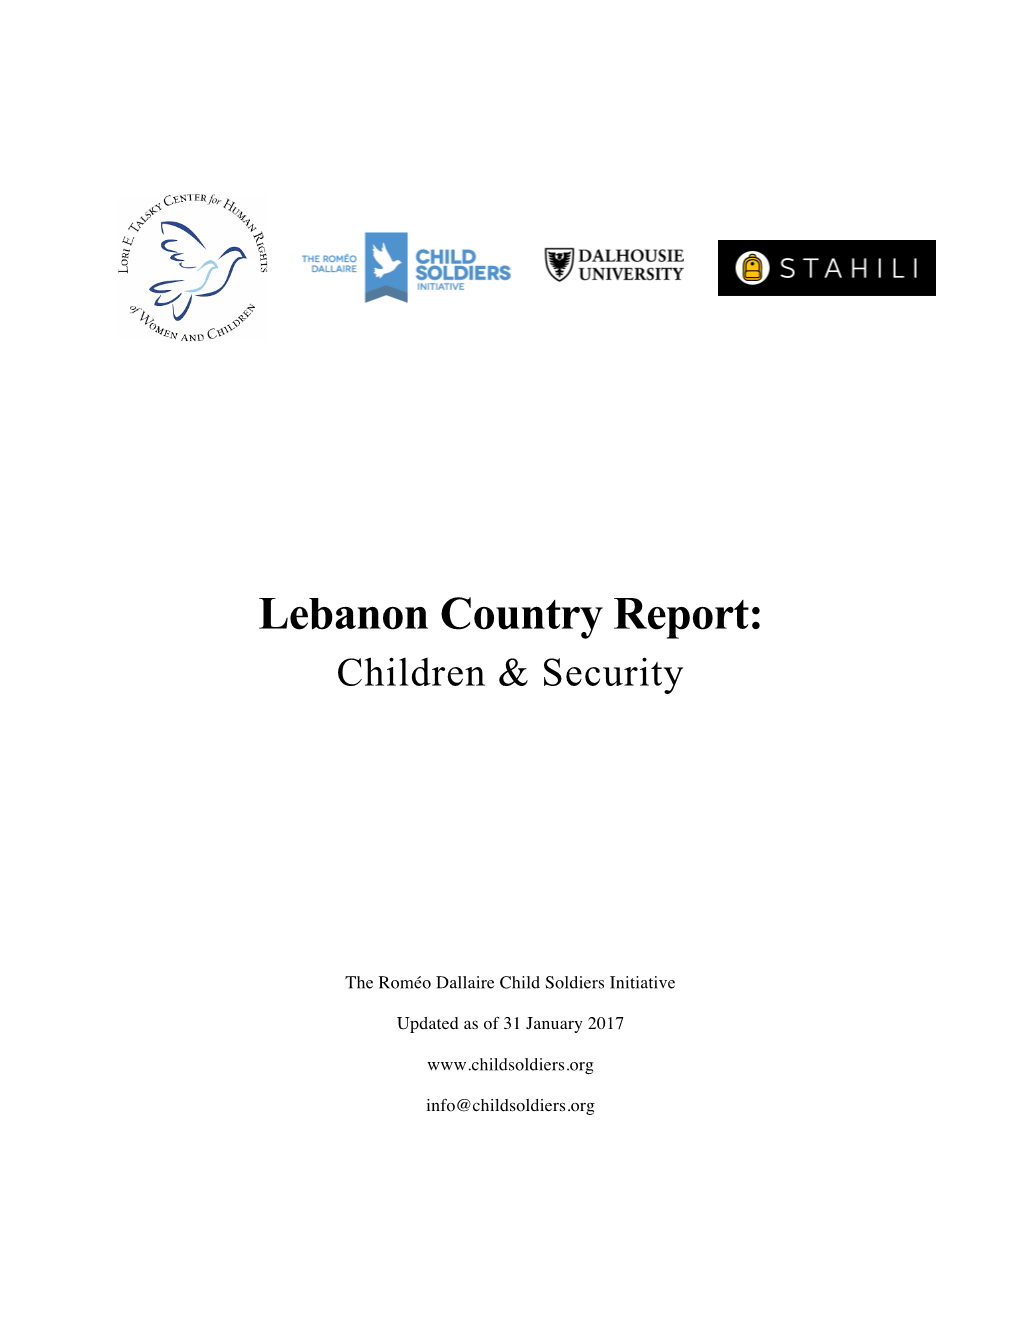 Lebanon Country Report: Children & Security